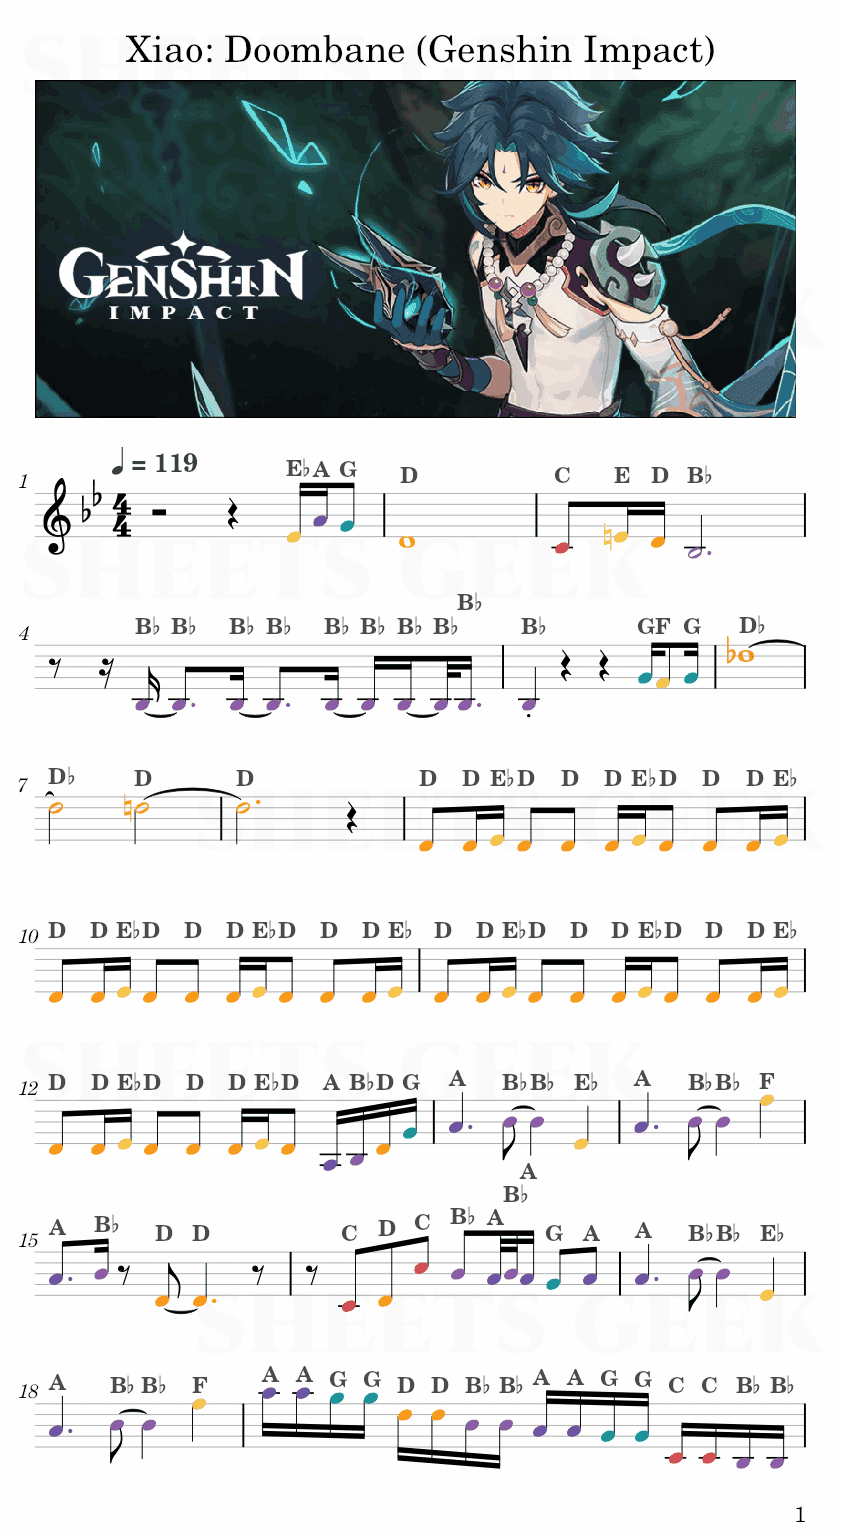 Xiao: Doombane (Genshin Impact) Easy Sheet Music Free for piano, keyboard, flute, violin, sax, cello page 1